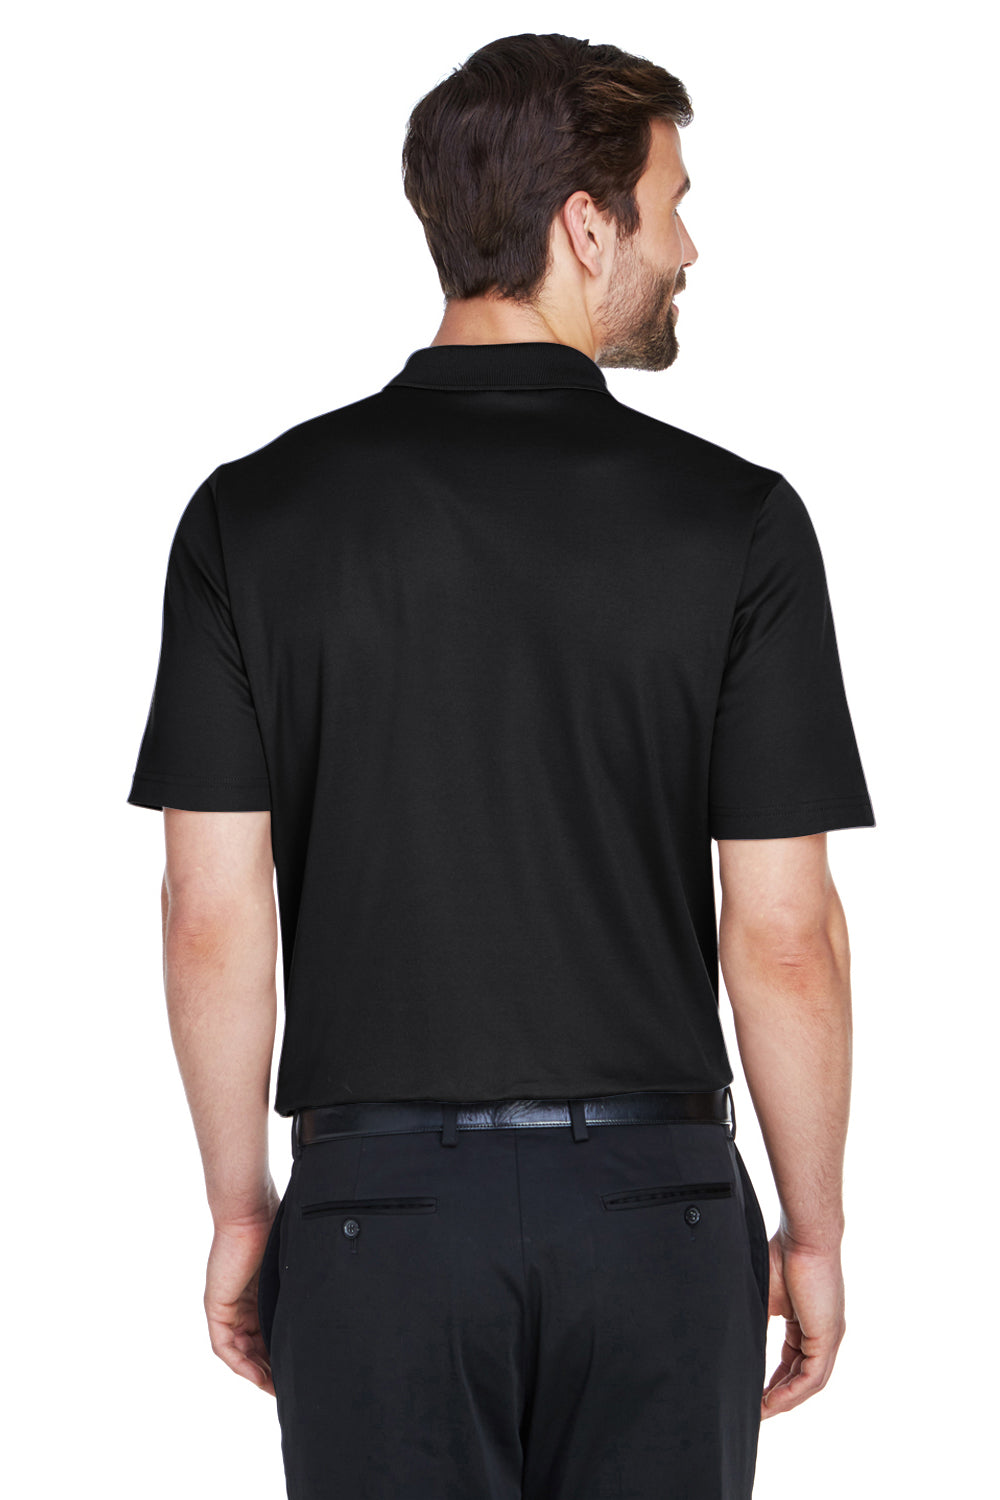 Devon & Jones DG20 Mens CrownLux Performance Moisture Wicking Short Sleeve Polo Shirt Black Back